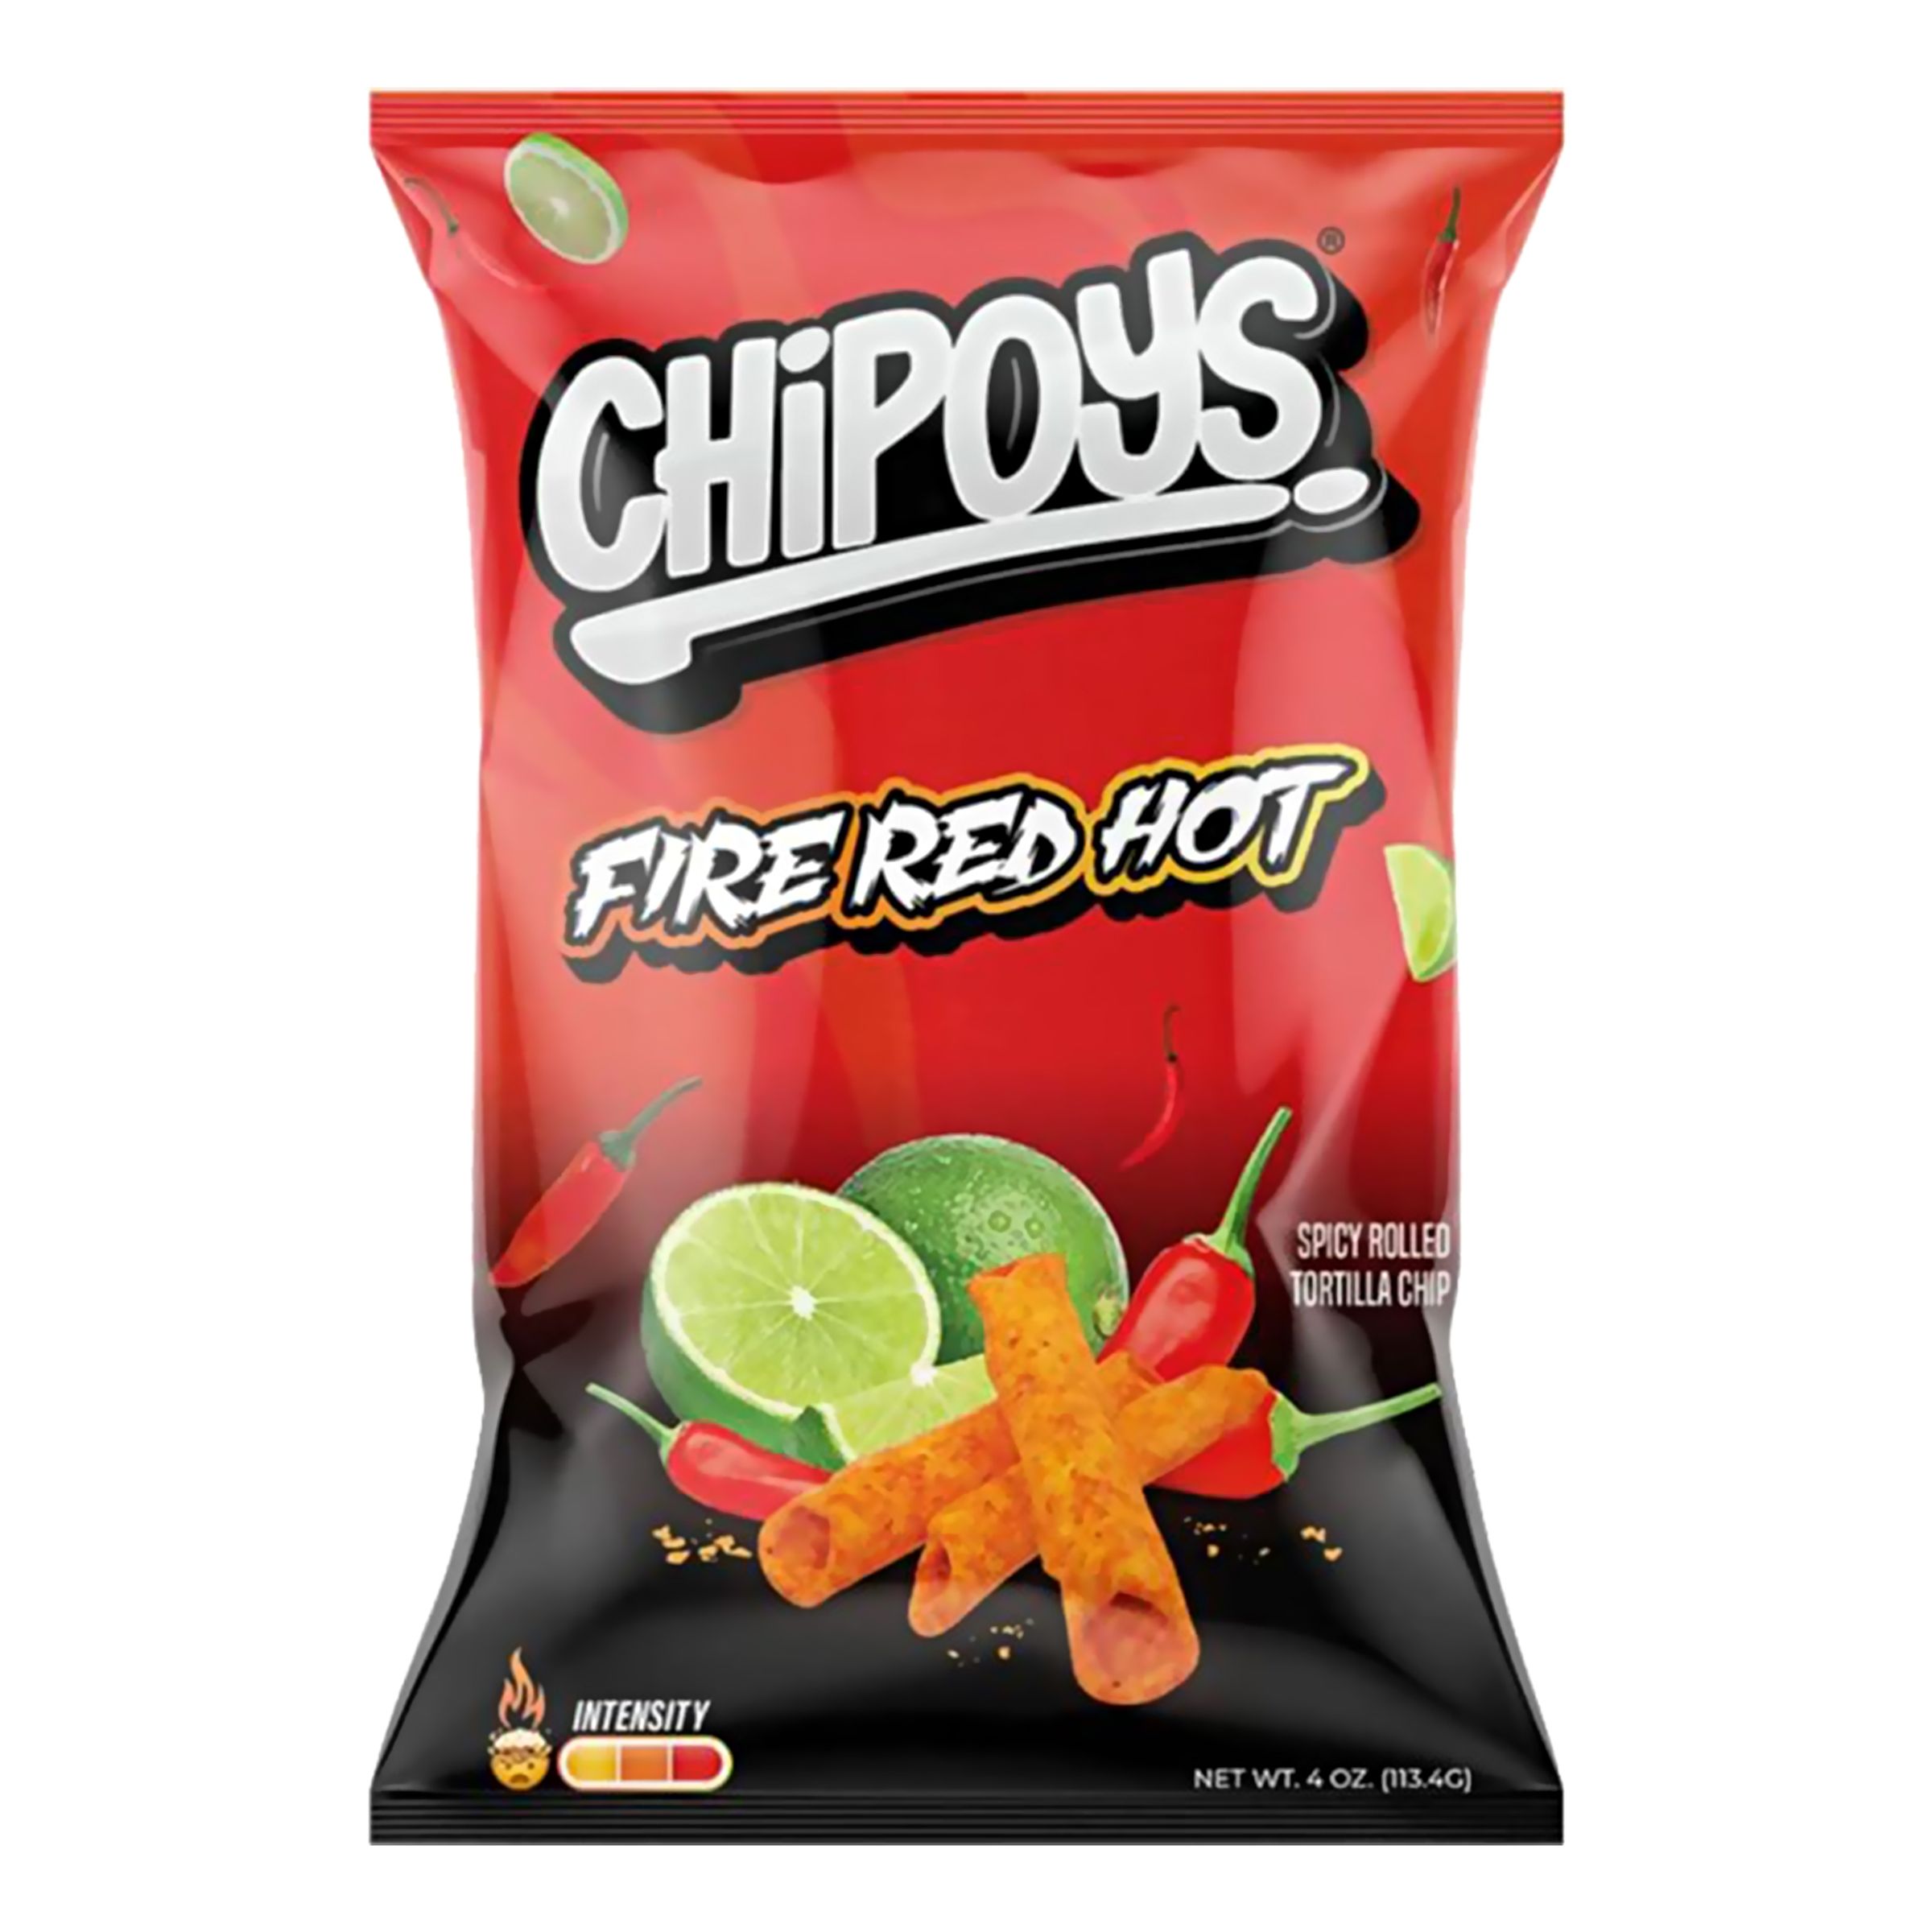 Chipoys Fire Red Hot Tortilla Chips - 113 gram